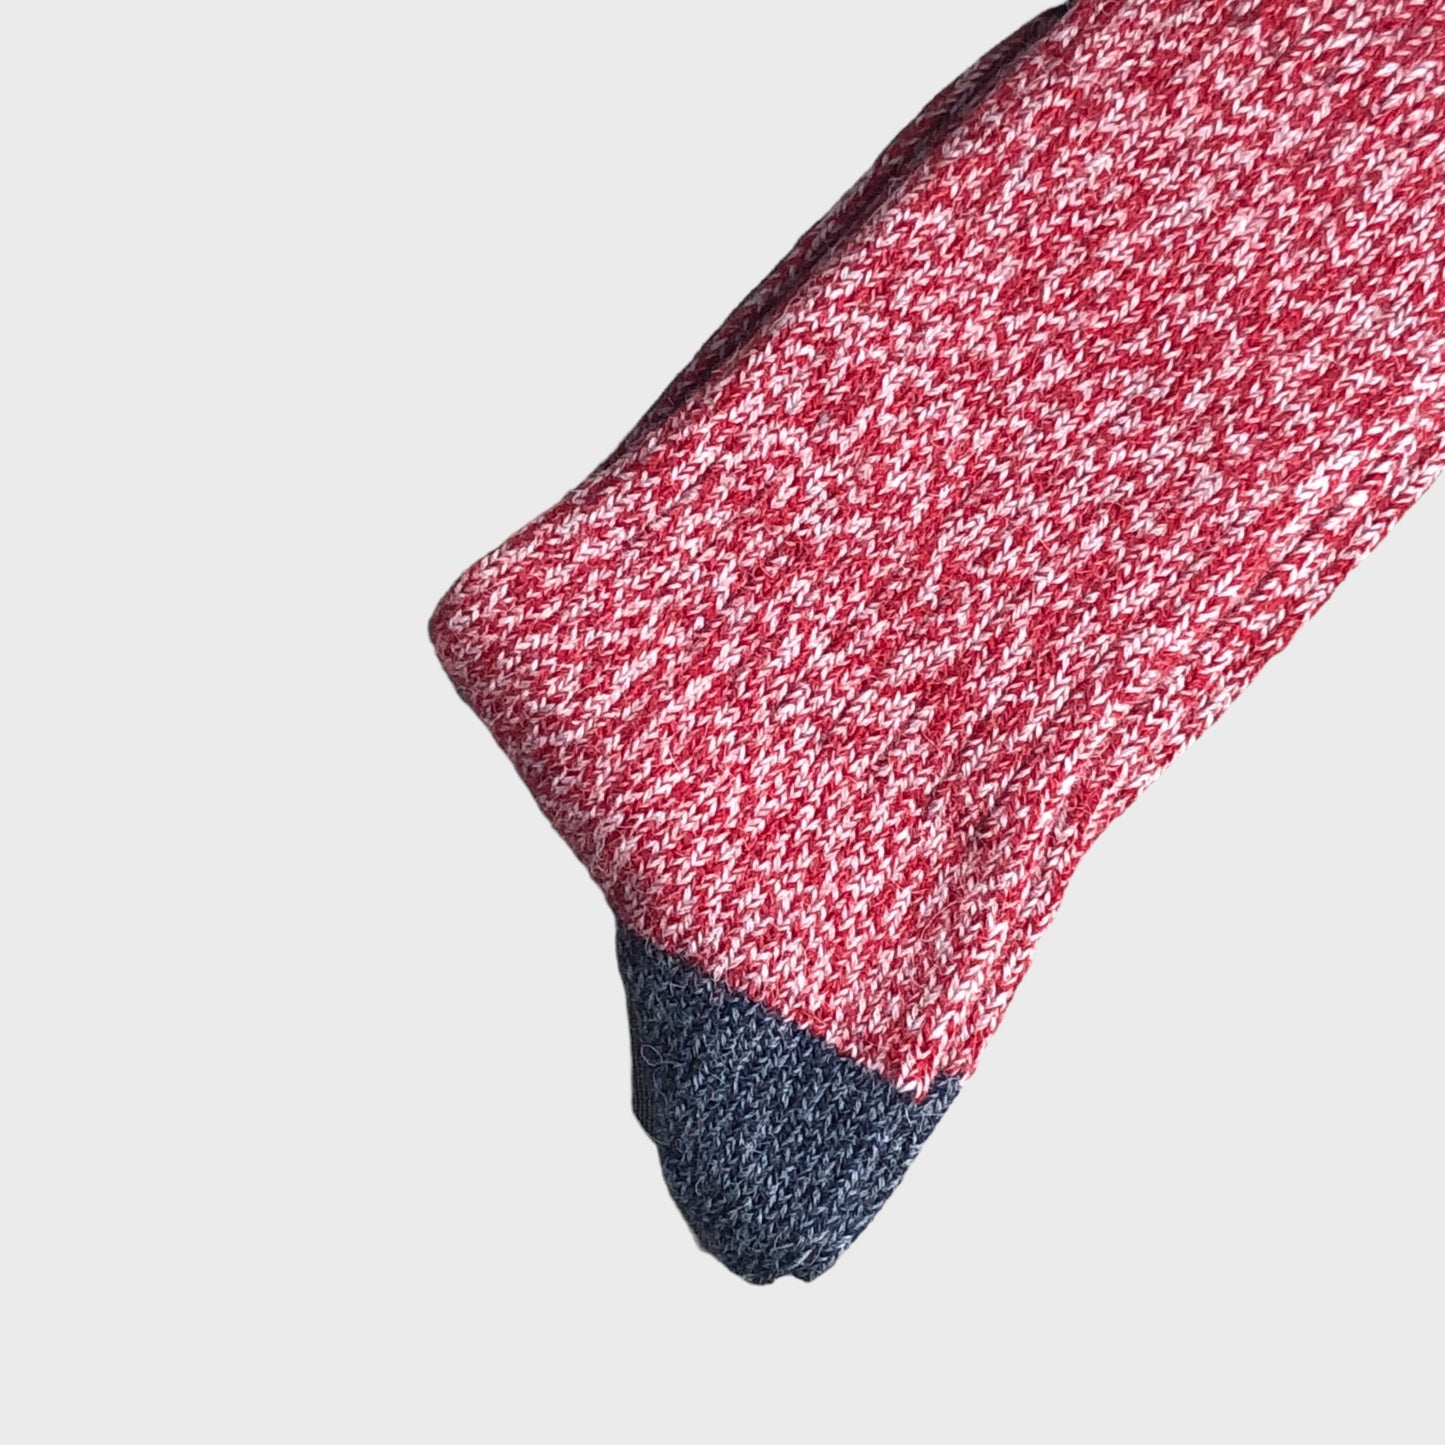 Patapaca - Melange Rojo Socks